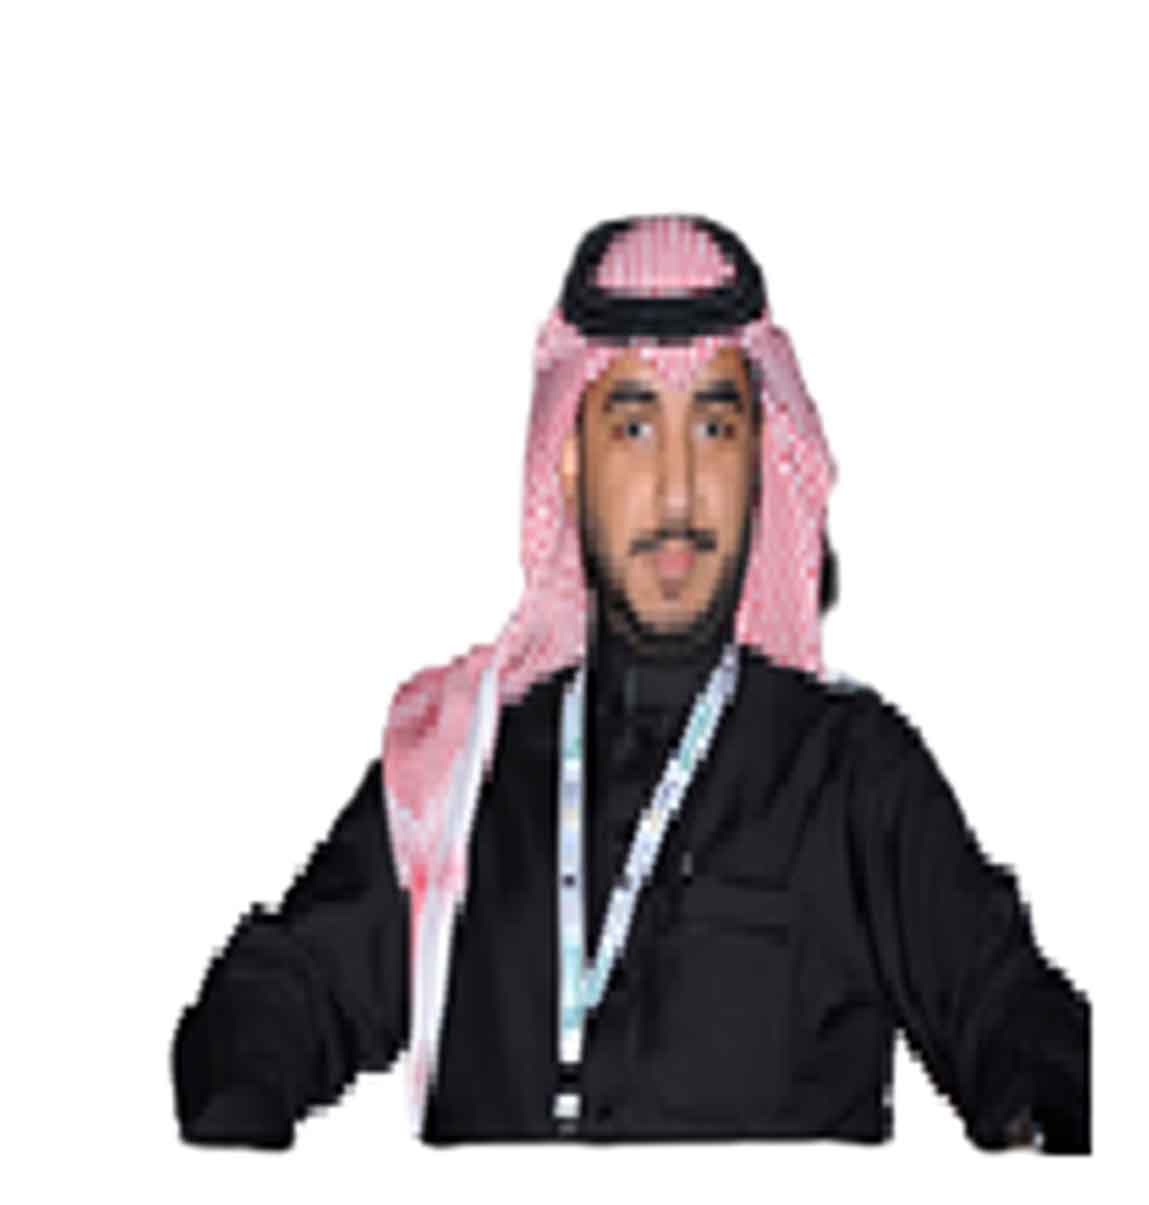 Mohammed Adel Al-Yaqout